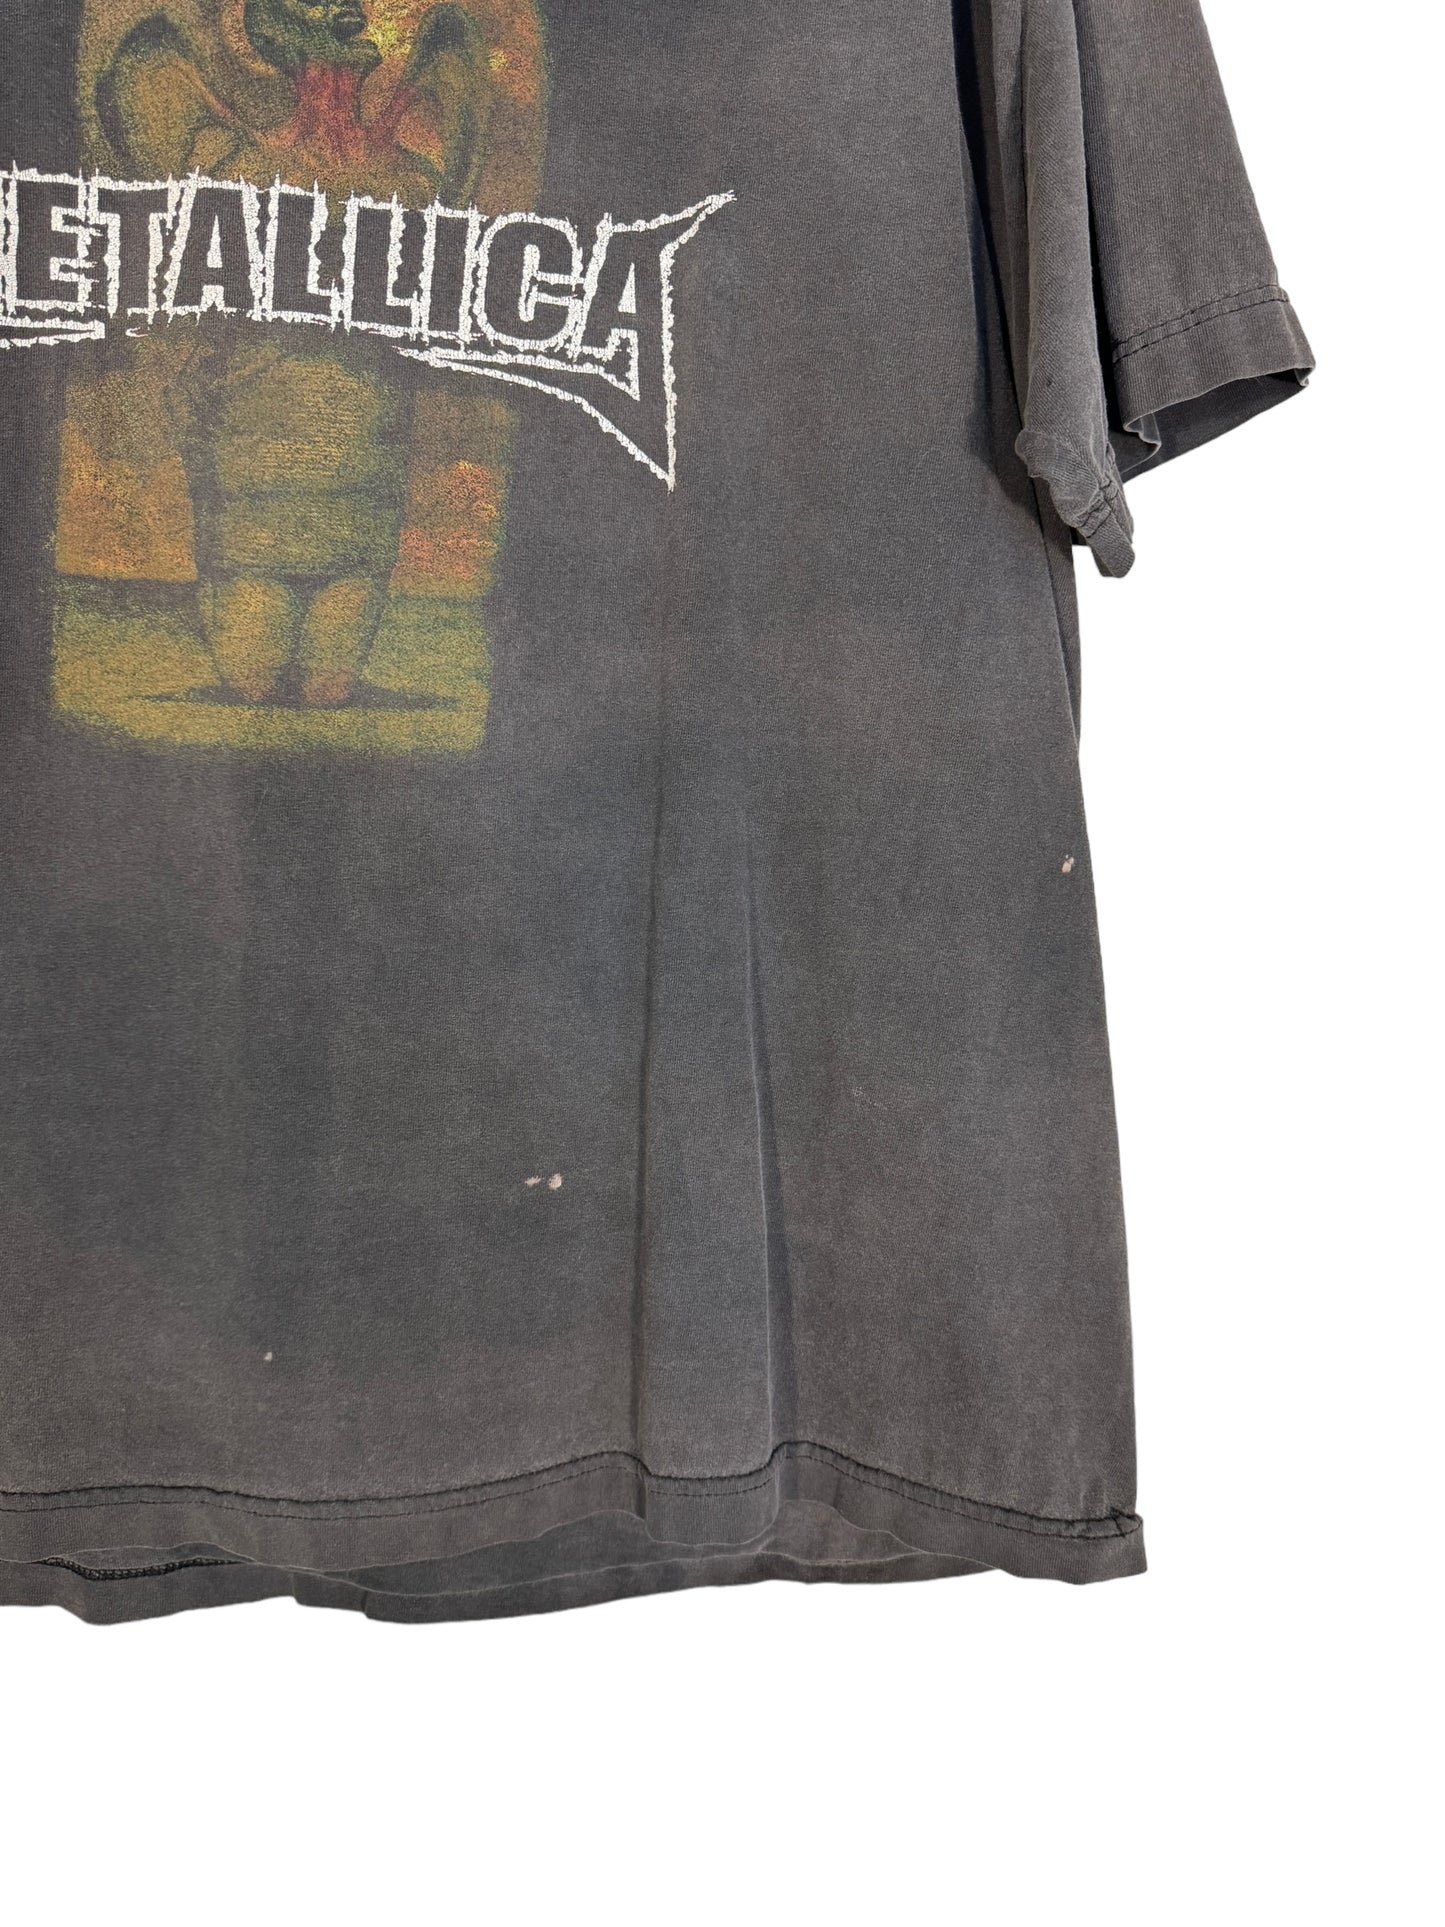 Vintage Metallica Shirt 2004 Metallica Concert Shirt